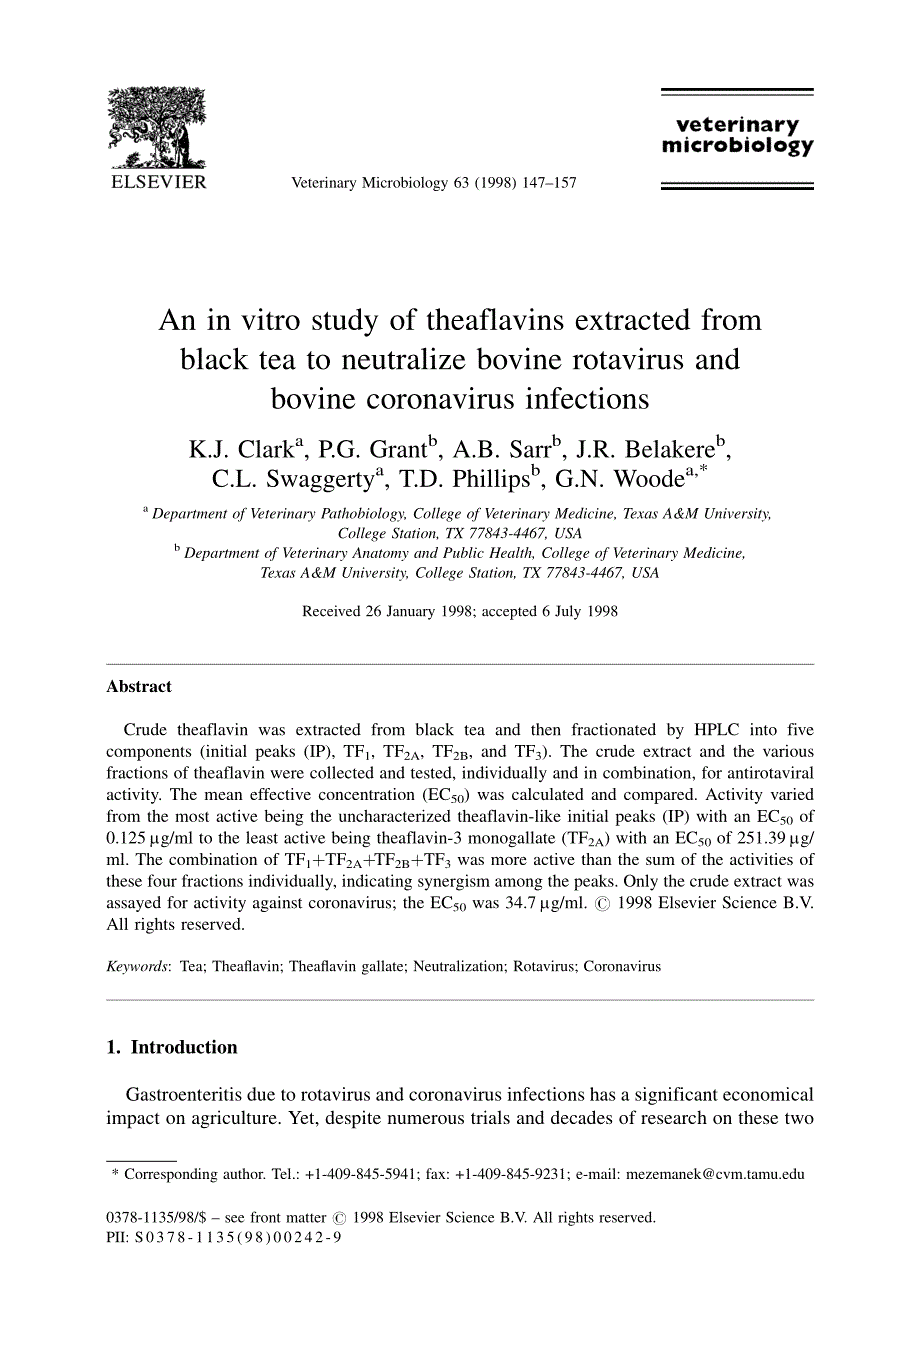 1998 An in vitro study of theaflavins extracted from black tea to neutralize bovine rotavirus and bovine coronavirus inf_第1页